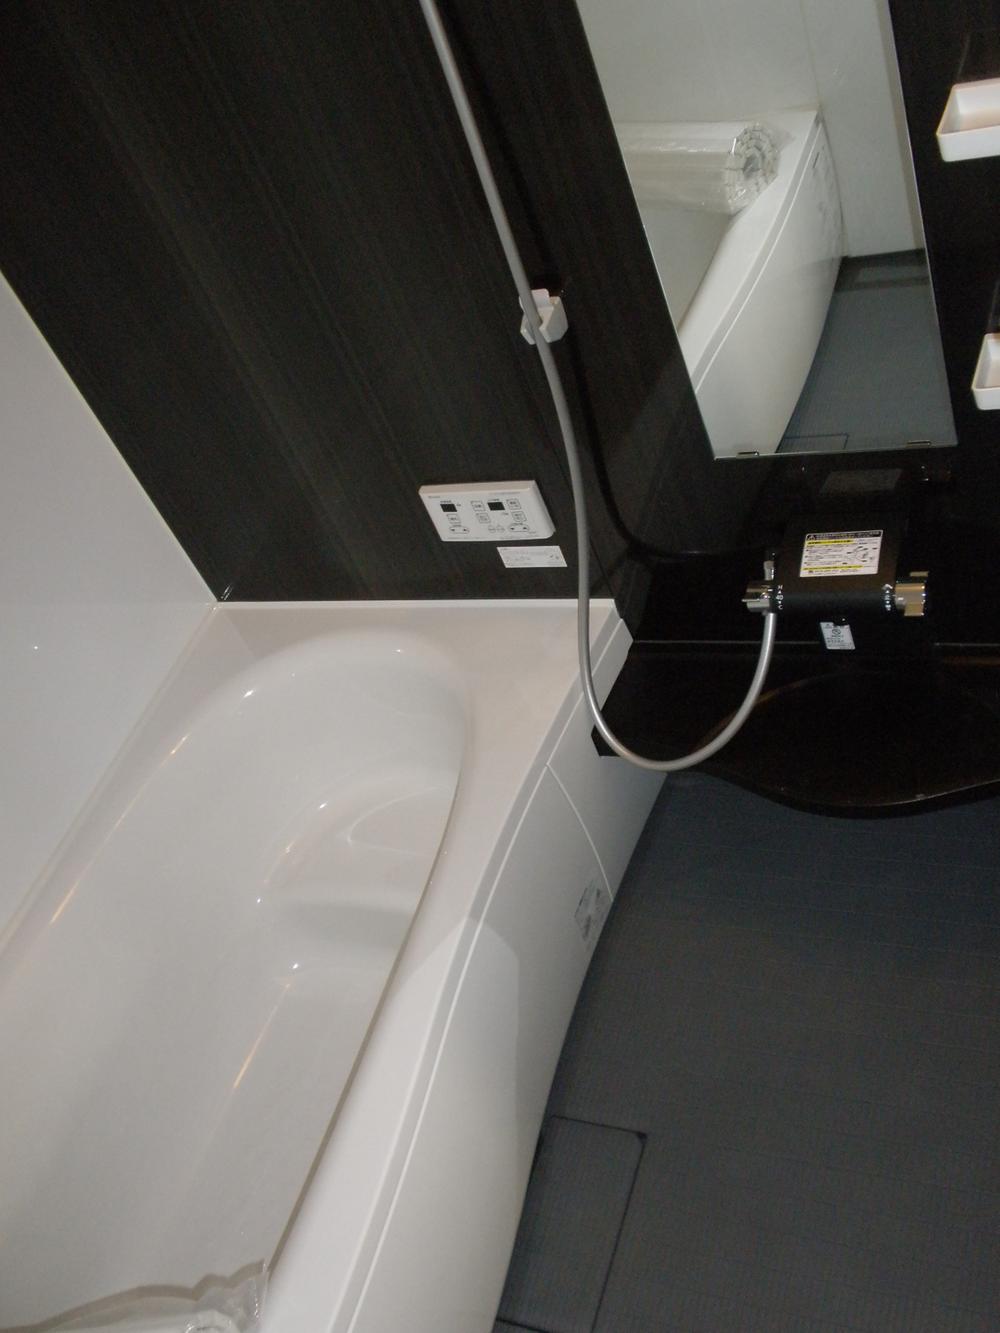 Same specifications photo (bathroom). Bathroom made of Panasonic